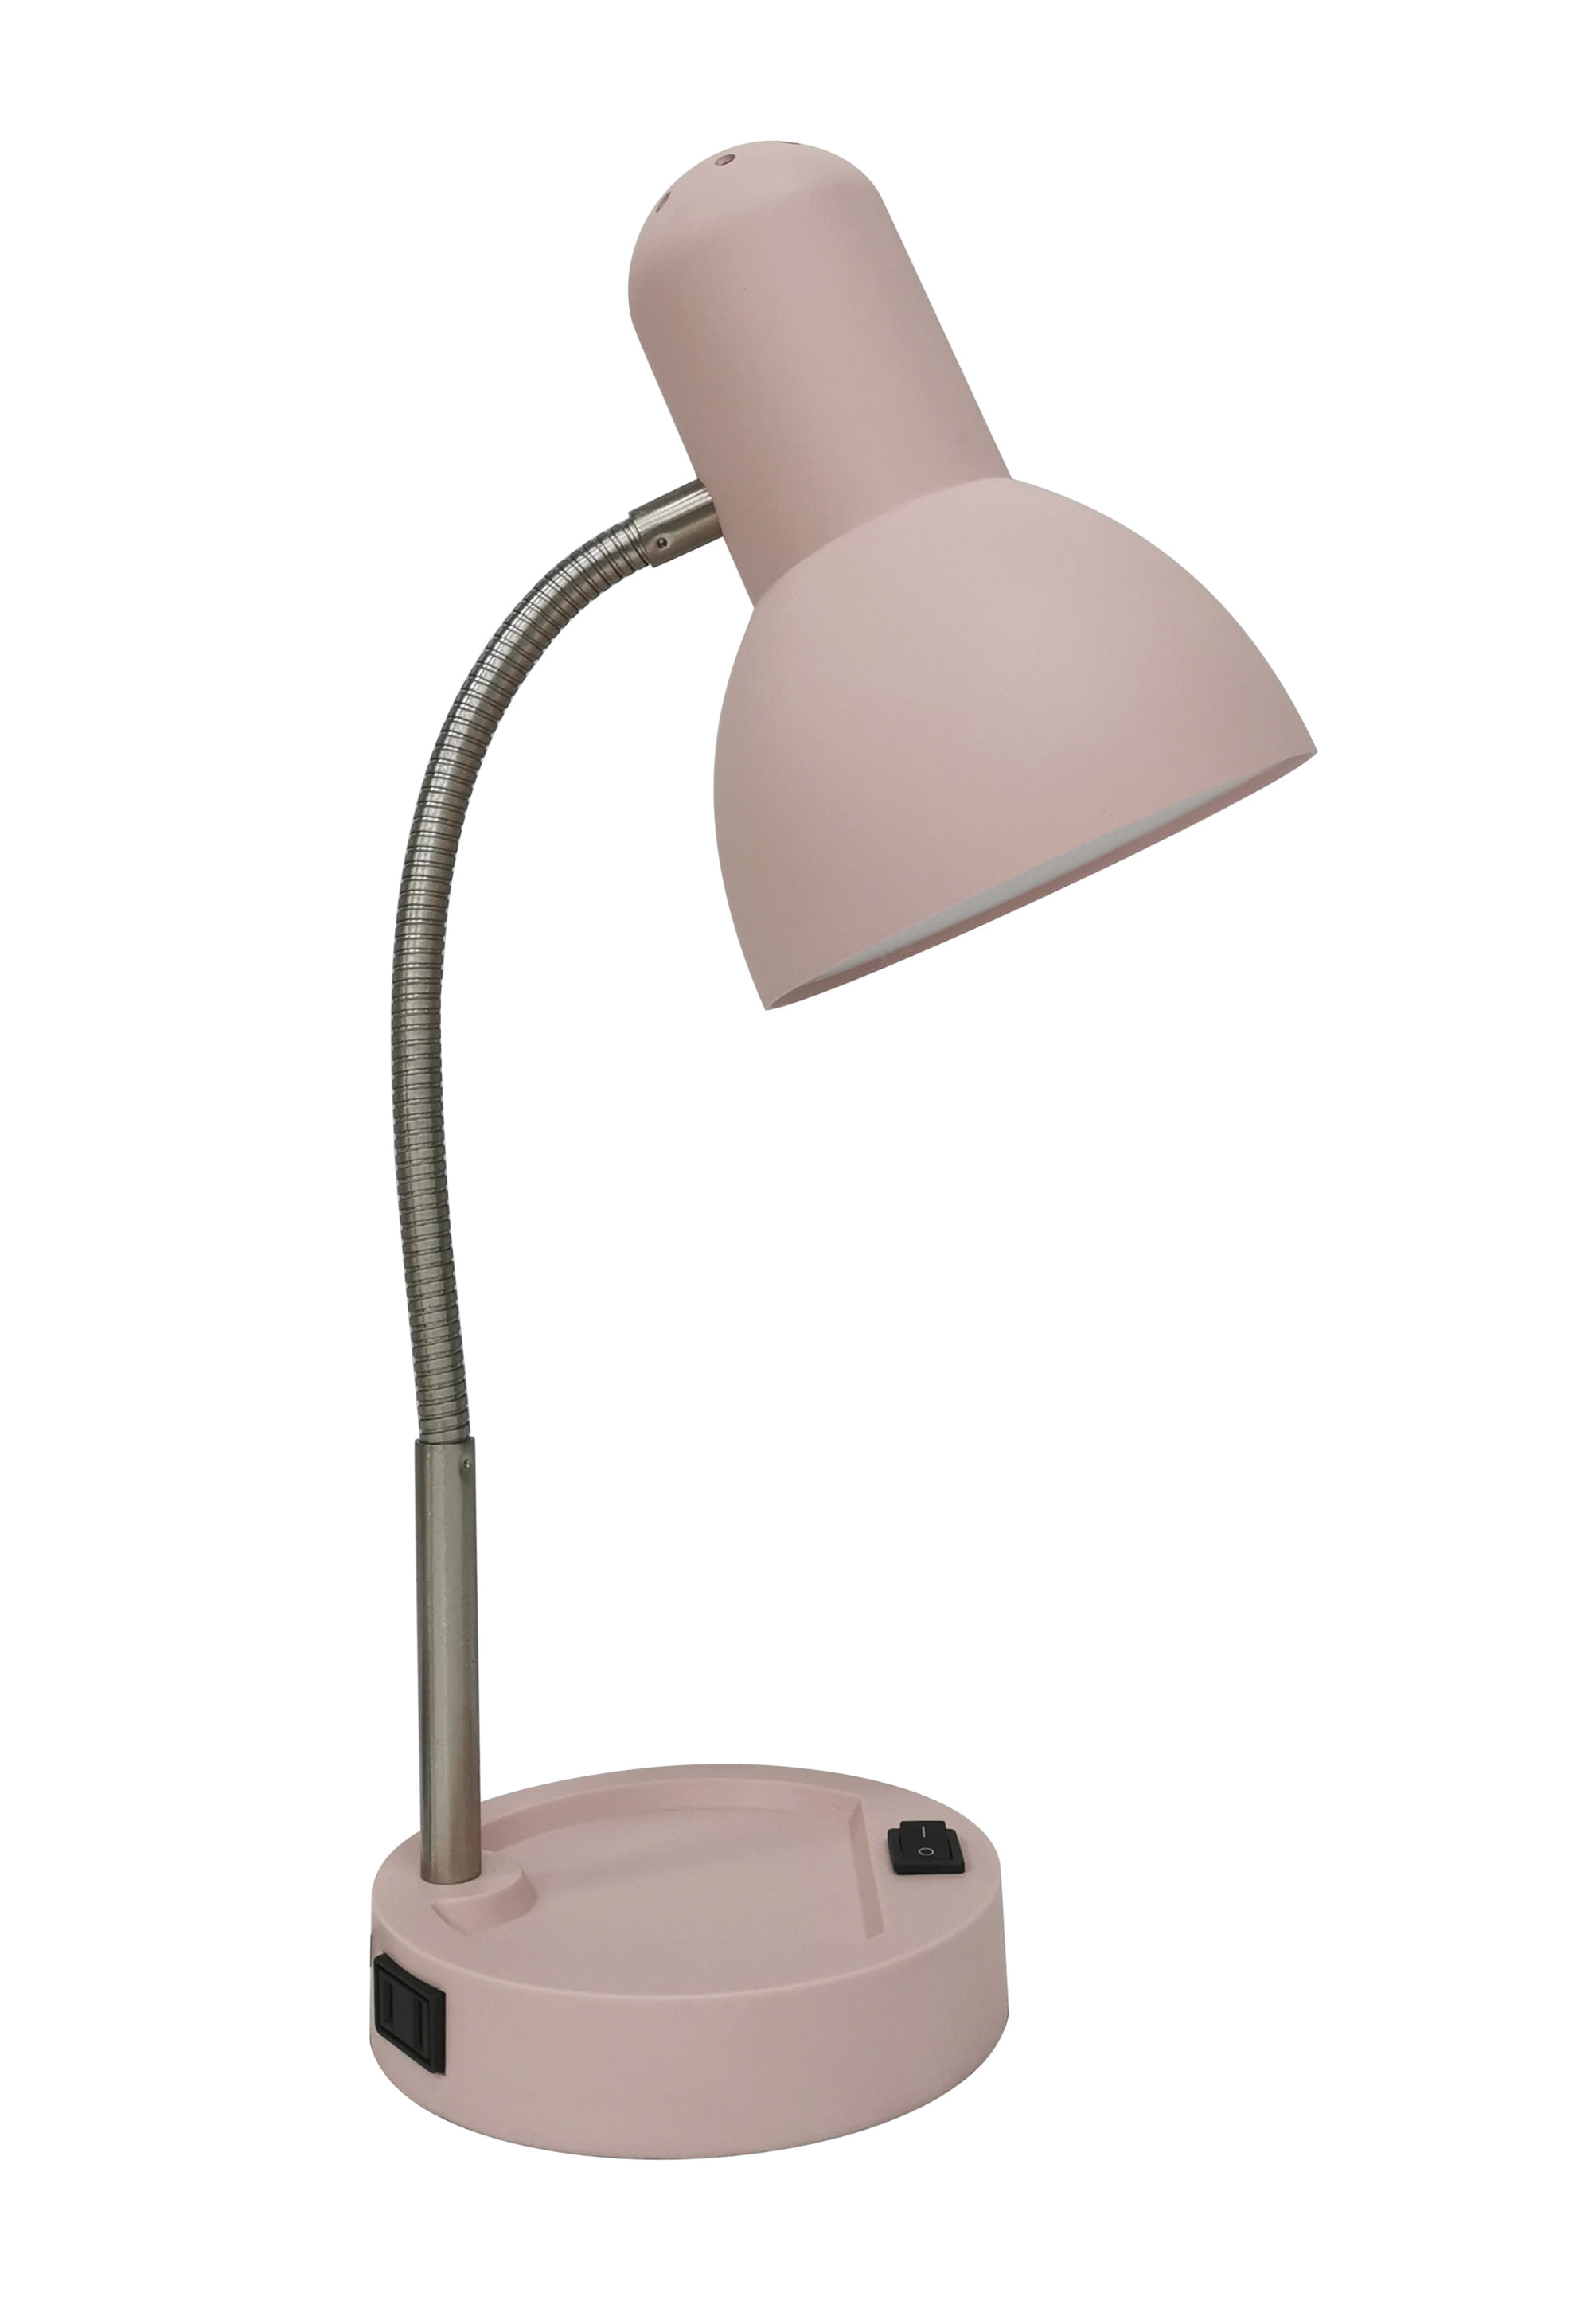 led table lamp walmart